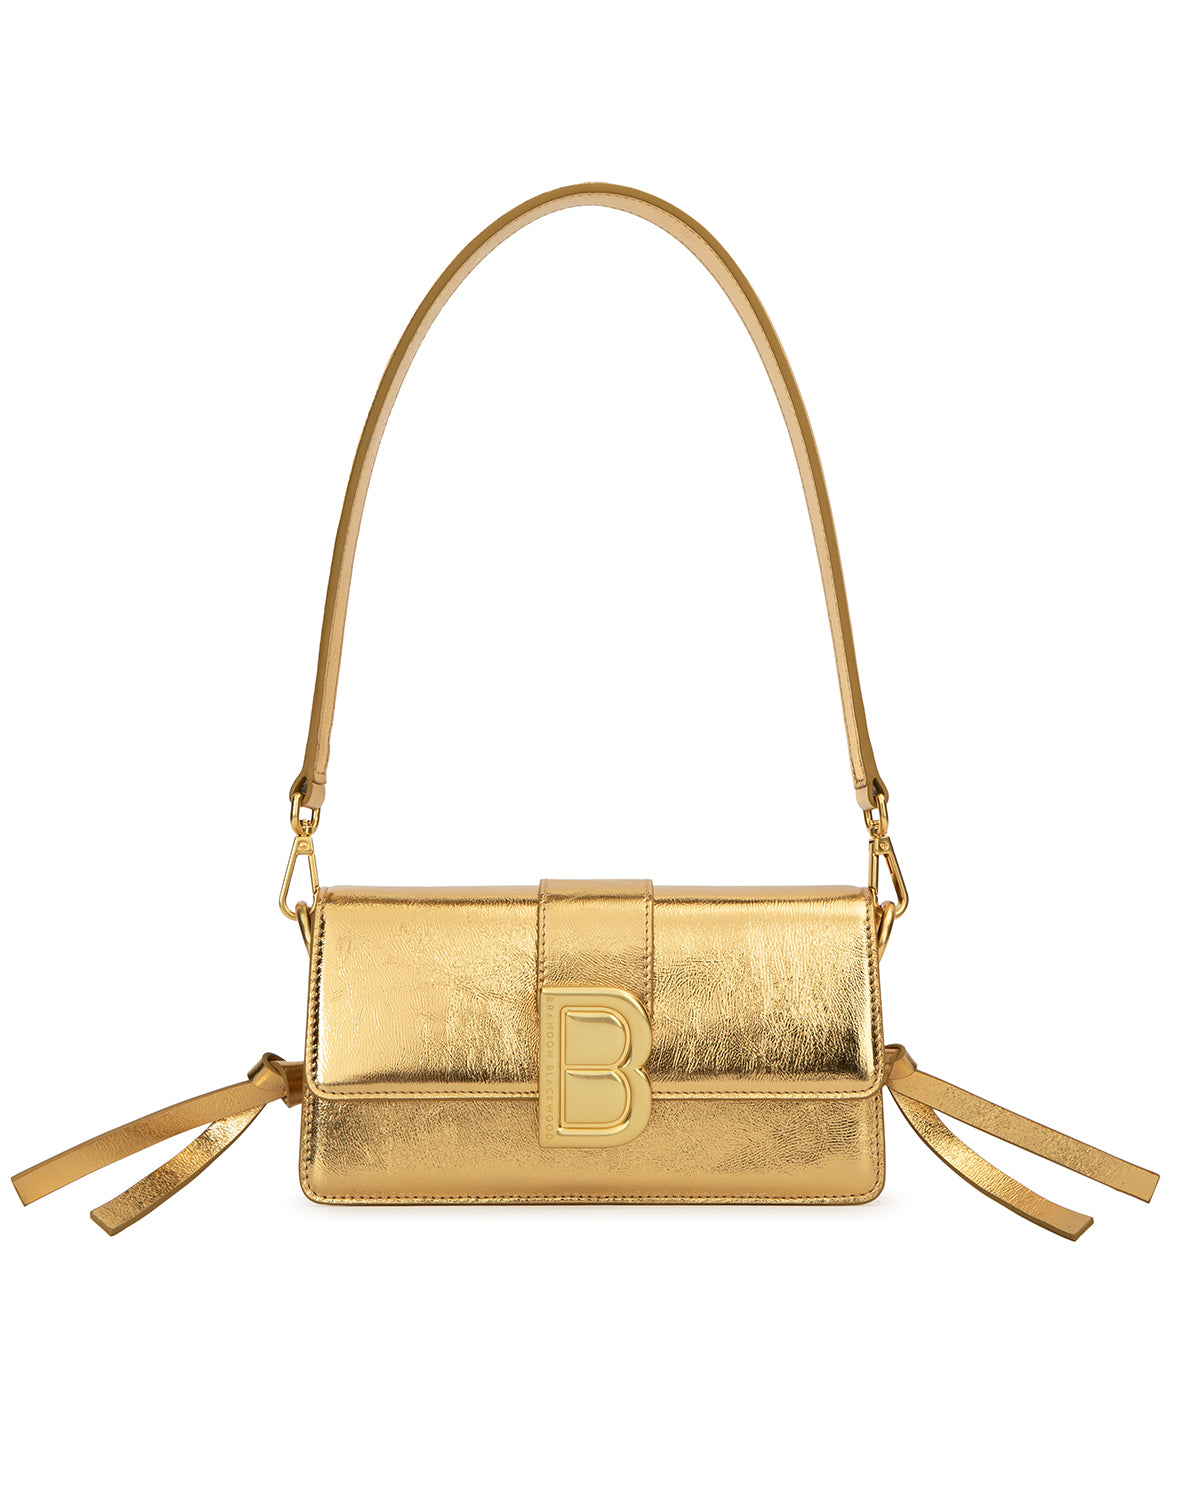 Brandon Blackwood New York - Medium Nia Bag - Gold Cracked Leather